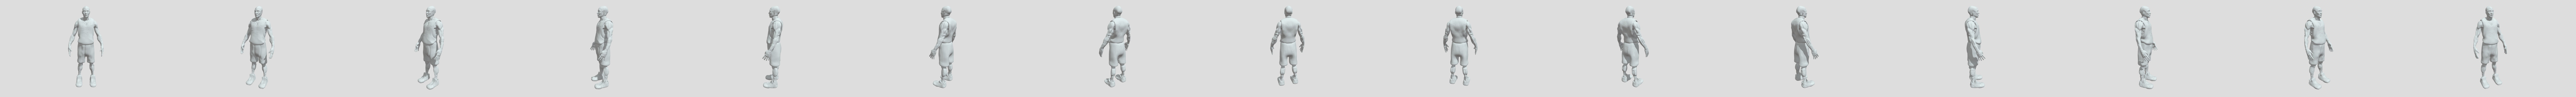 Kobe-bryant 3D models - Sketchfab